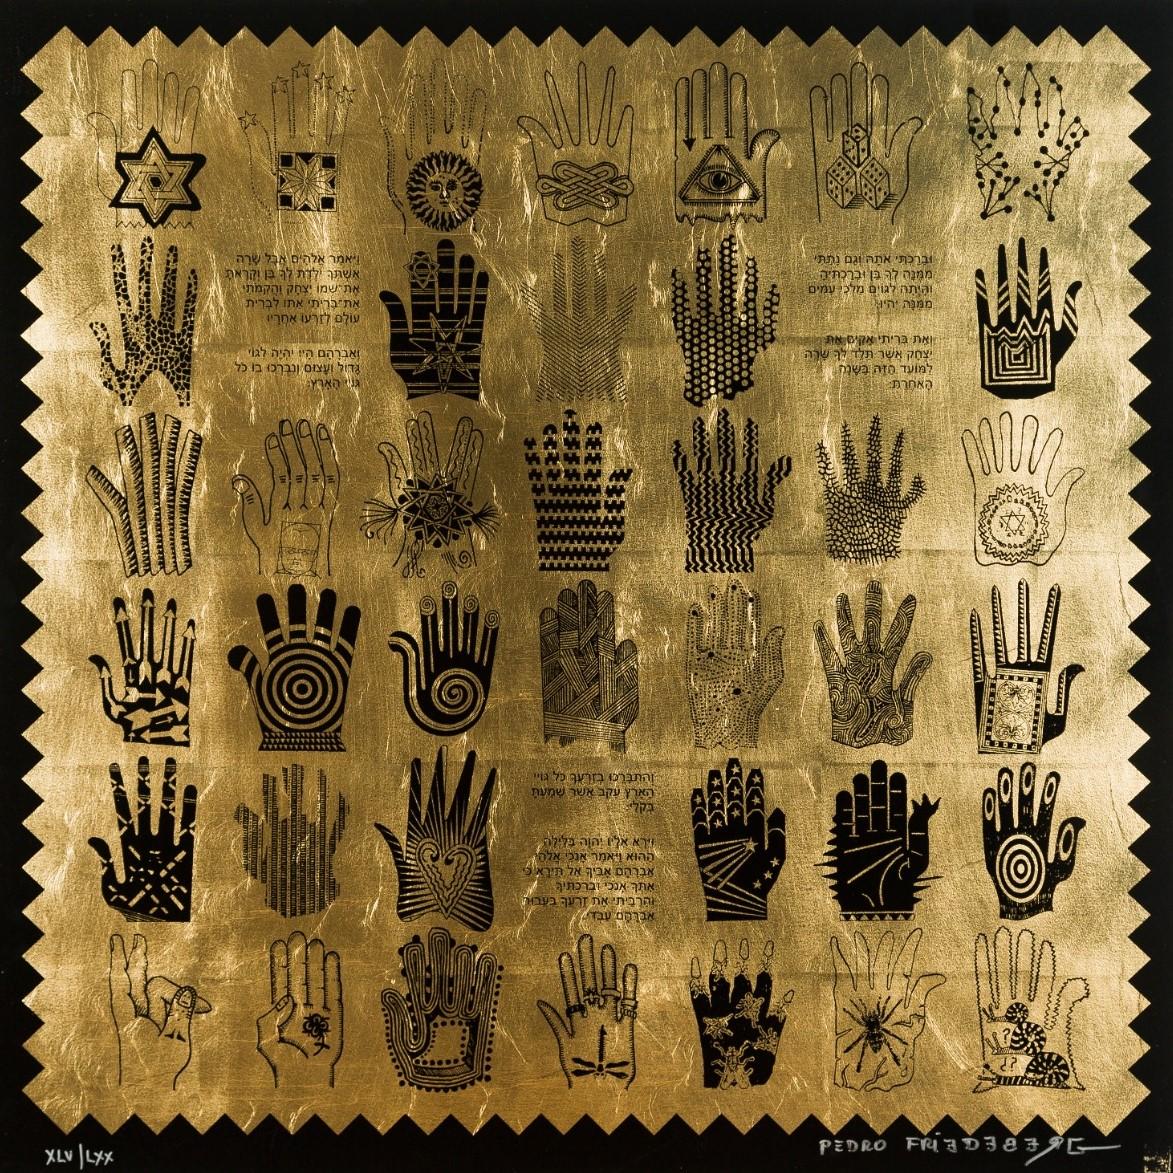 Pedro Friedeberg Figurative Print - Golden hands